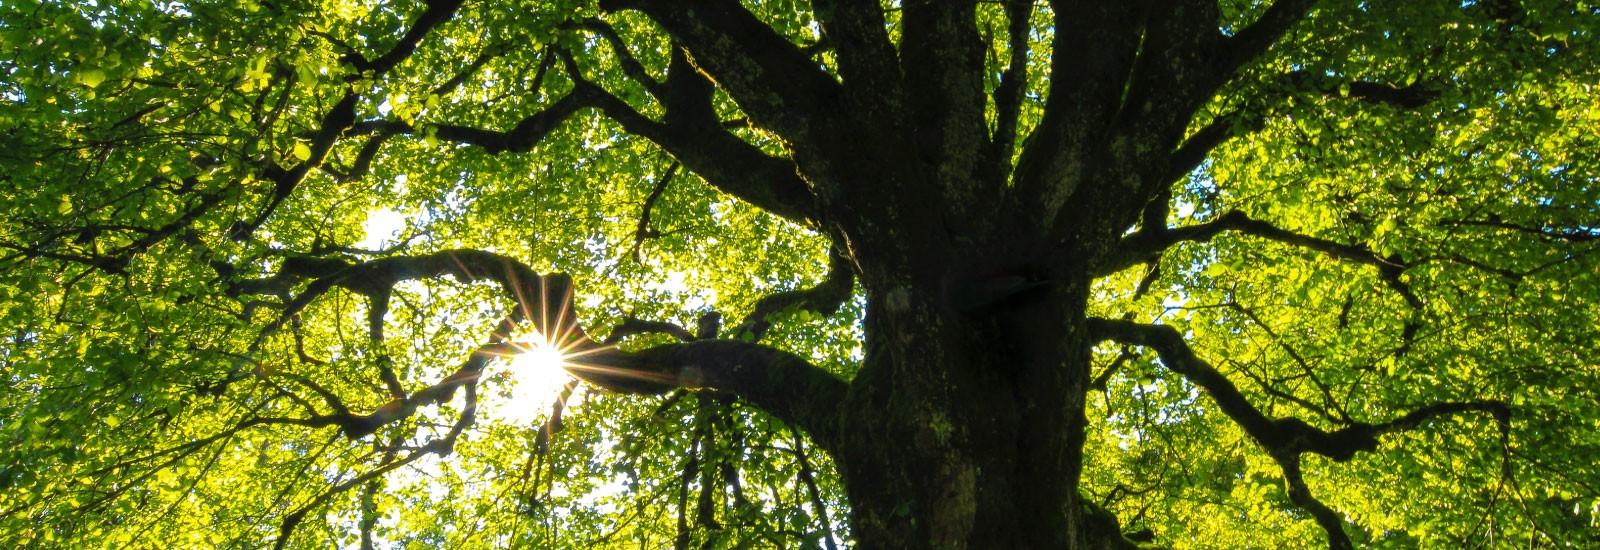 sunlight shining through green leaves with dark tree trunk 